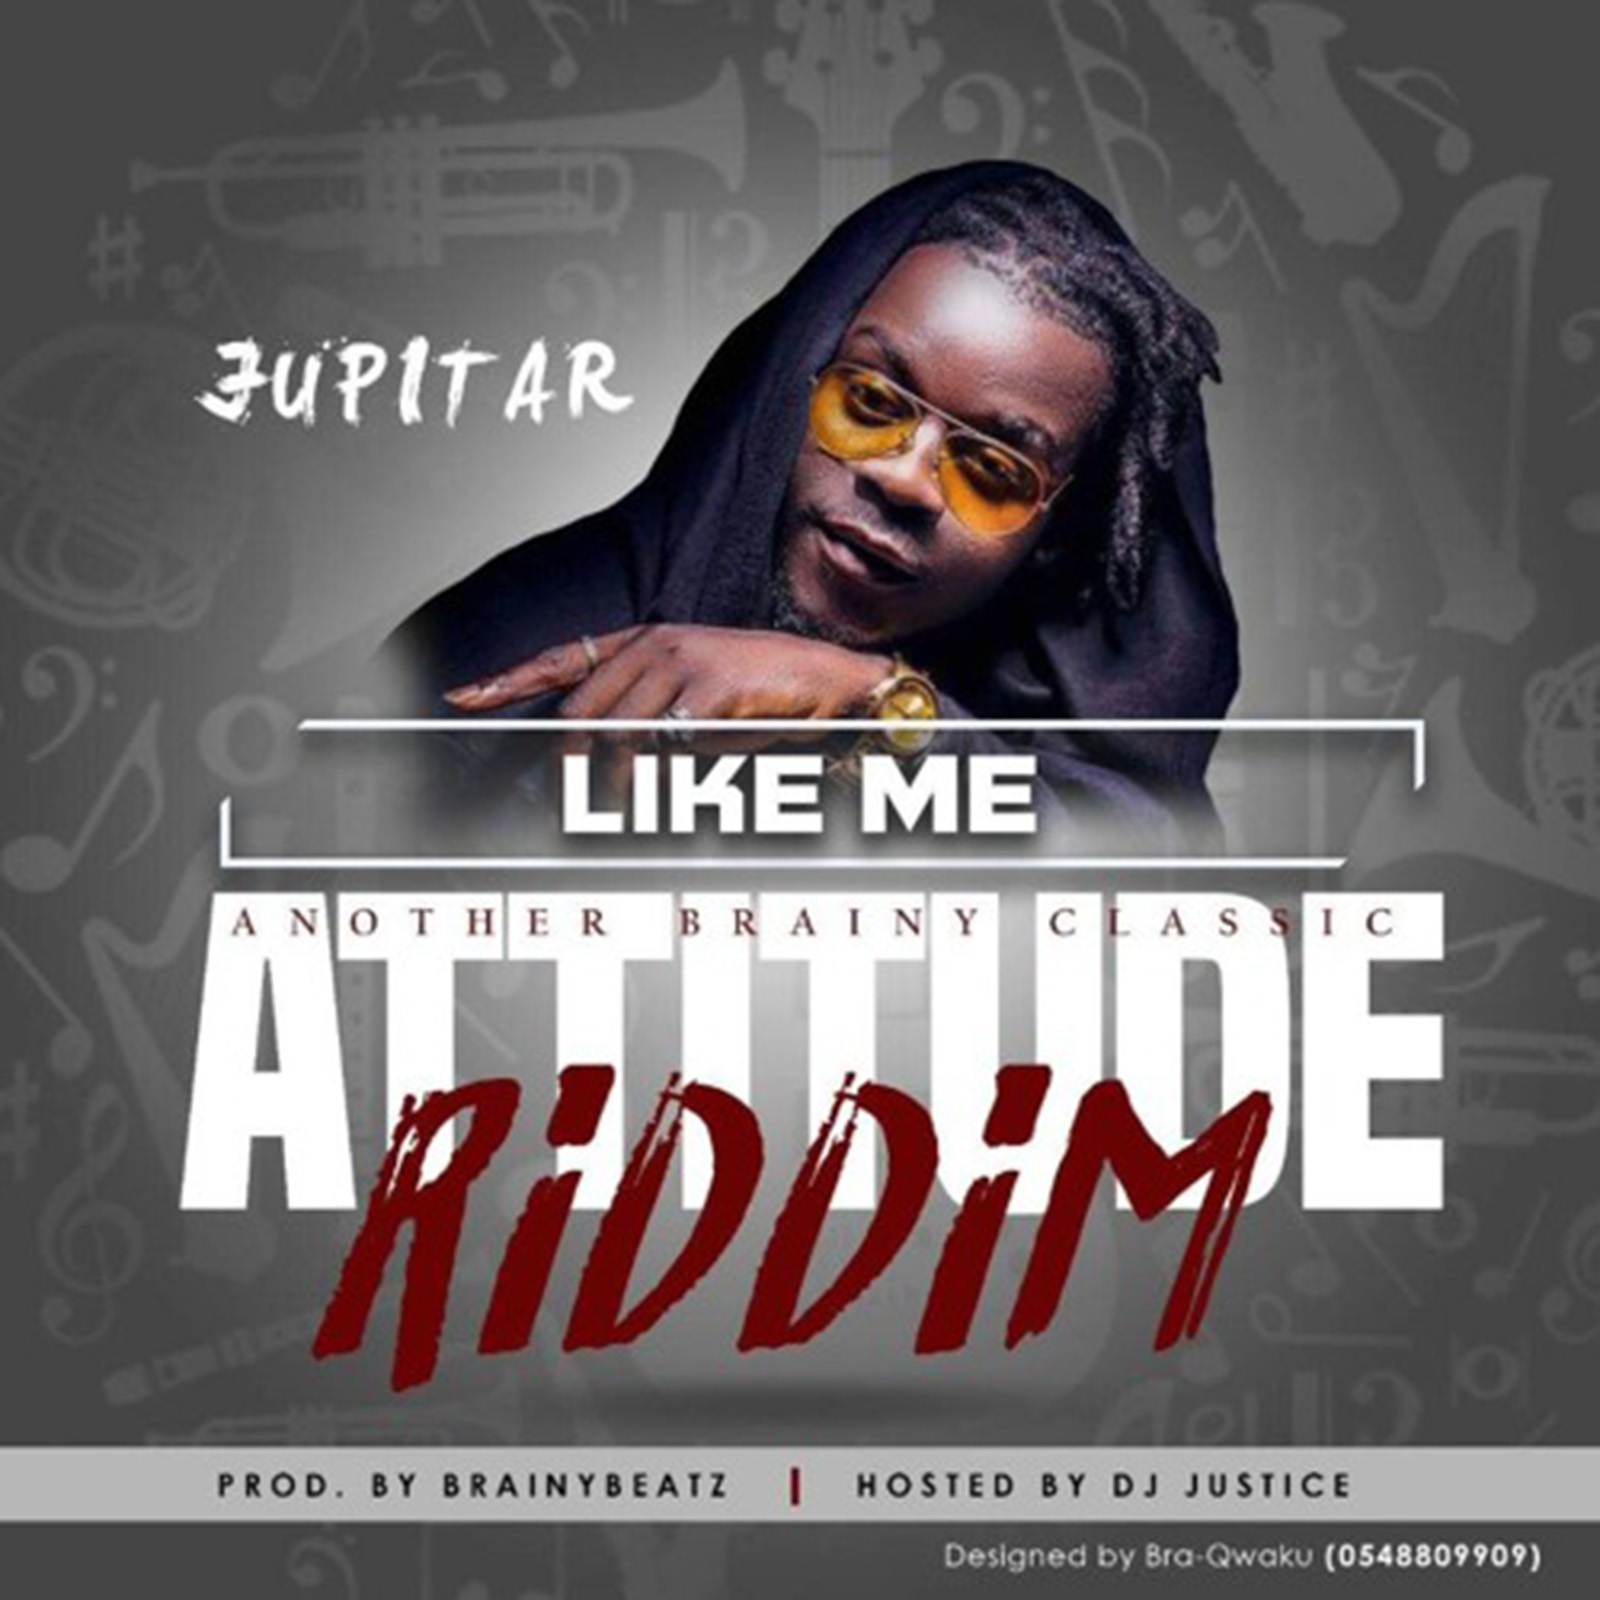 Like Me (Attitude Riddim) by Jupitar